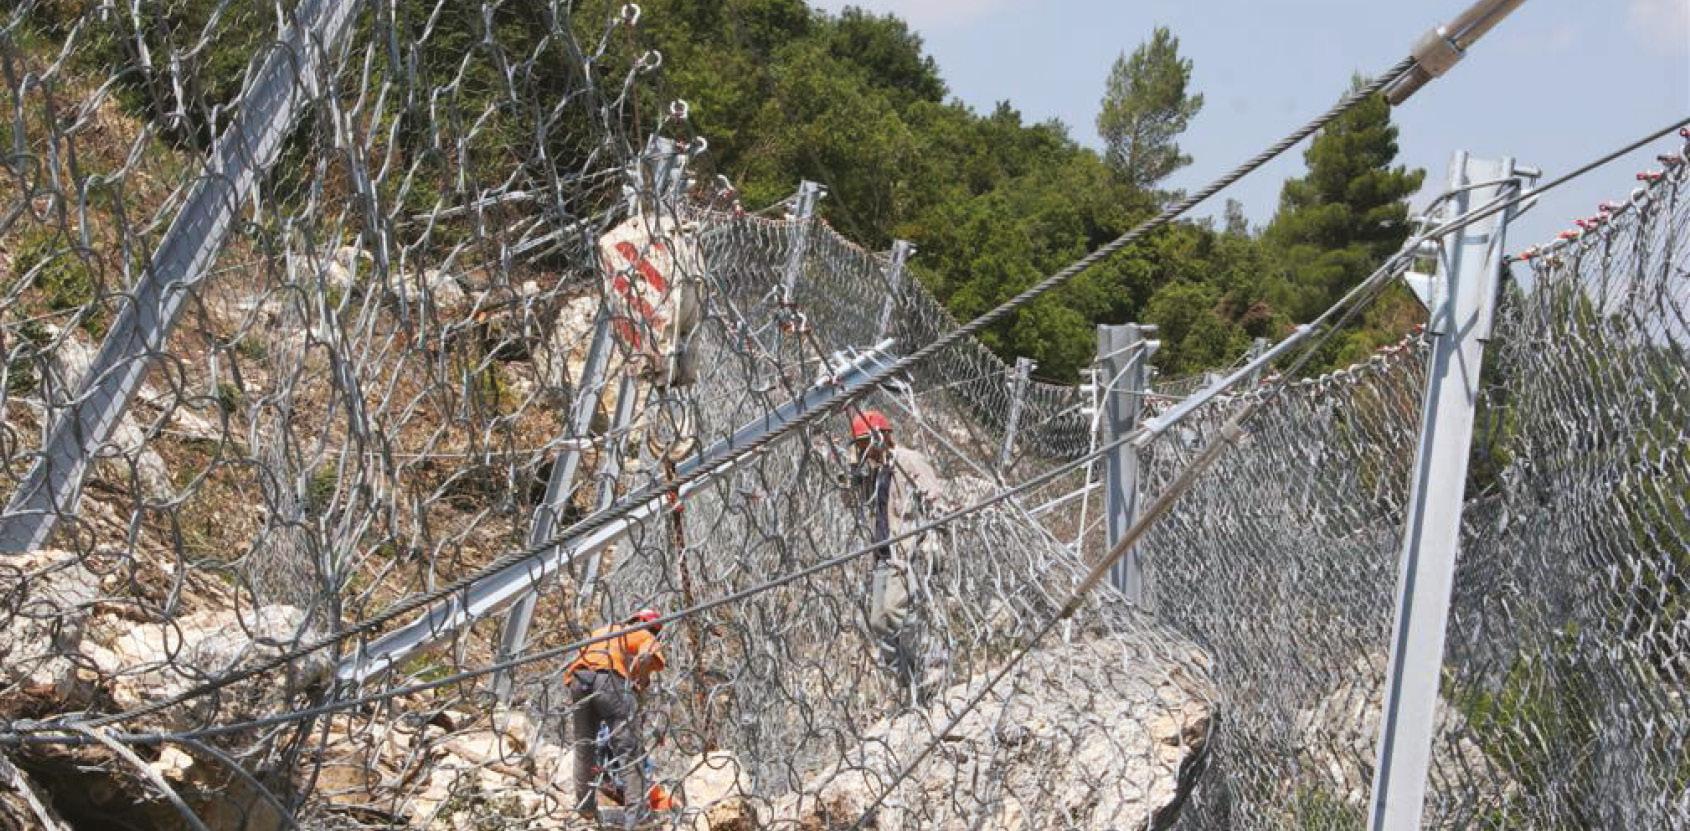 Maccaferri rockfall barrier catch fence body image